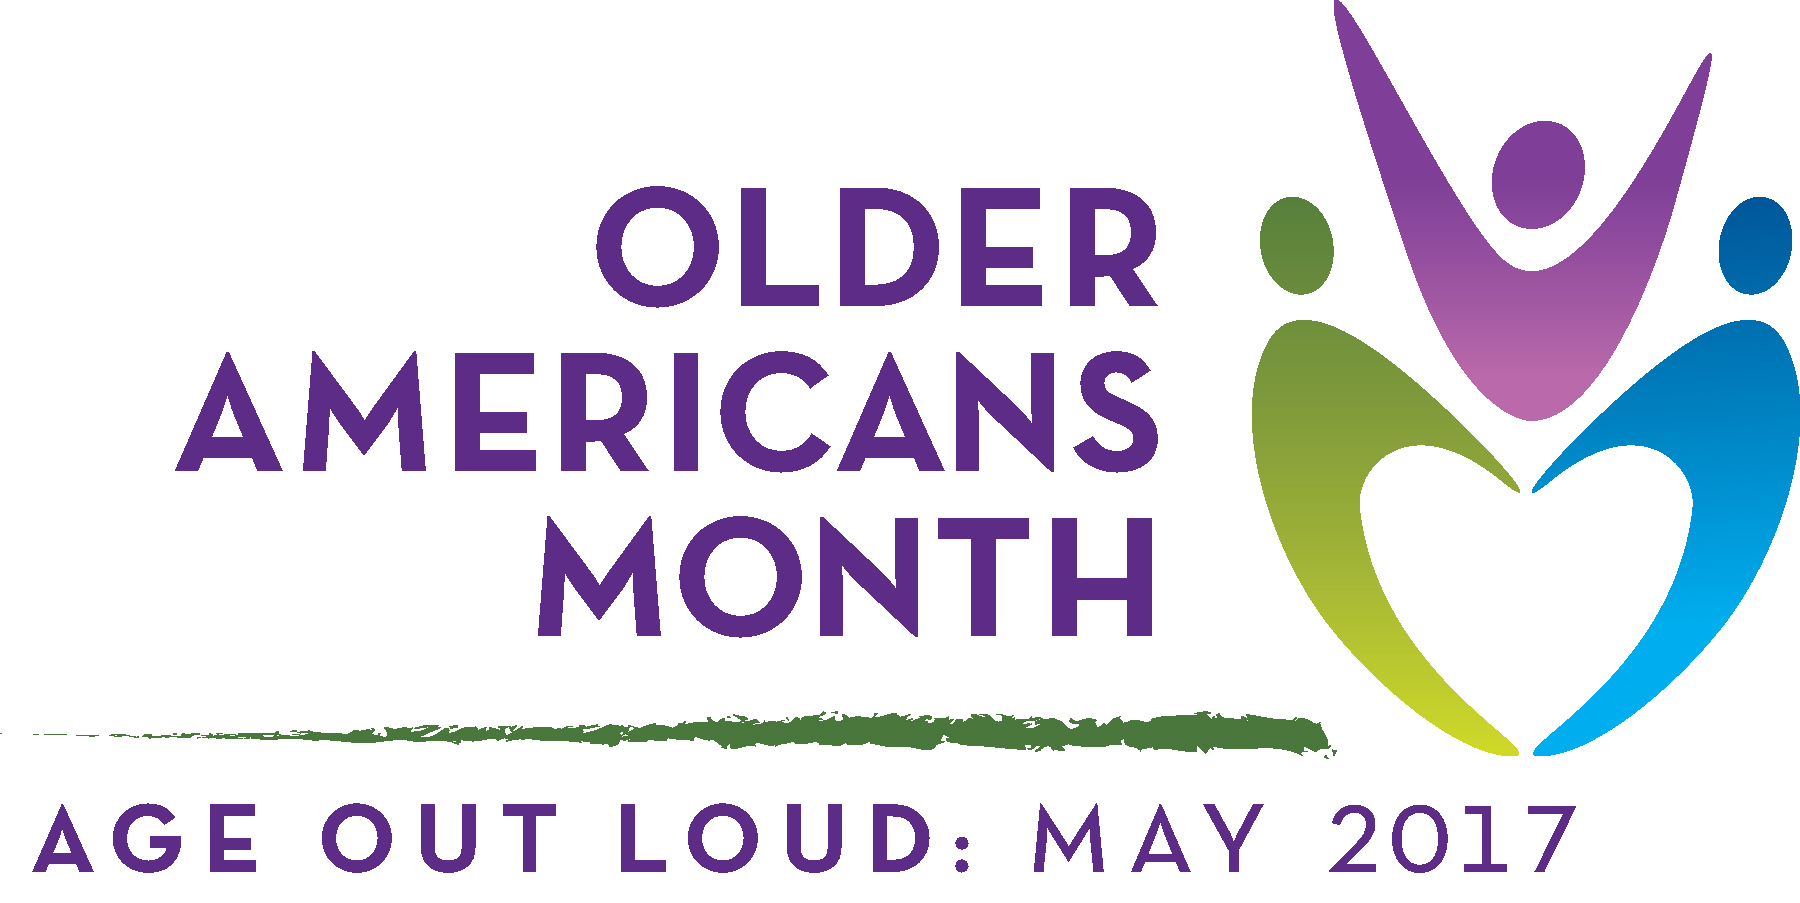 Older Americans Month poster